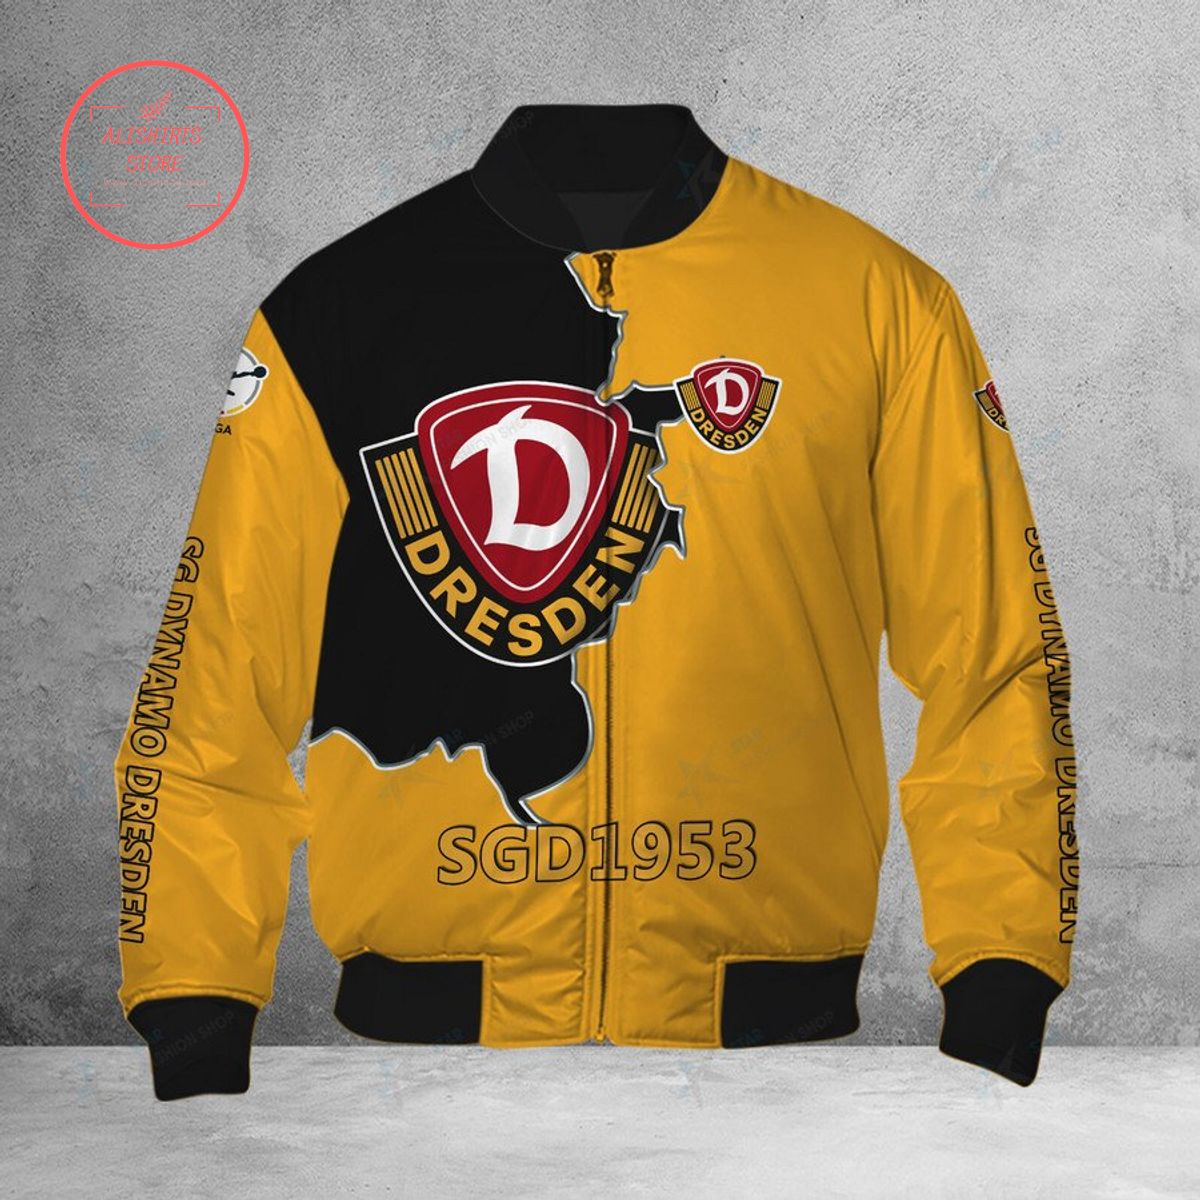 Dynamo Dresden Bomber Jacket